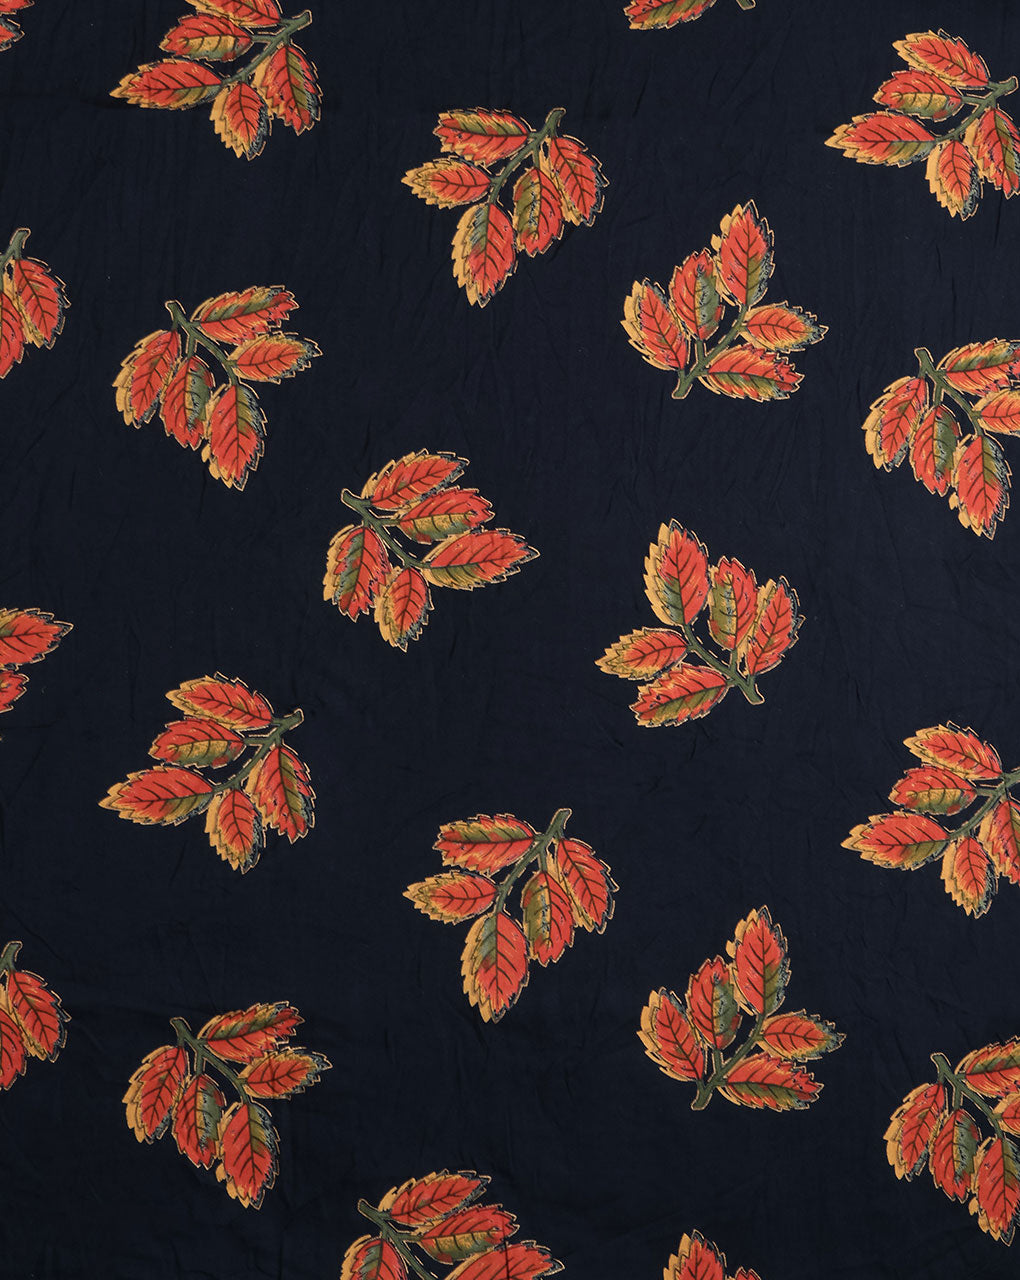 Floral Screen Print Rayon Fabric - Fabriclore.com